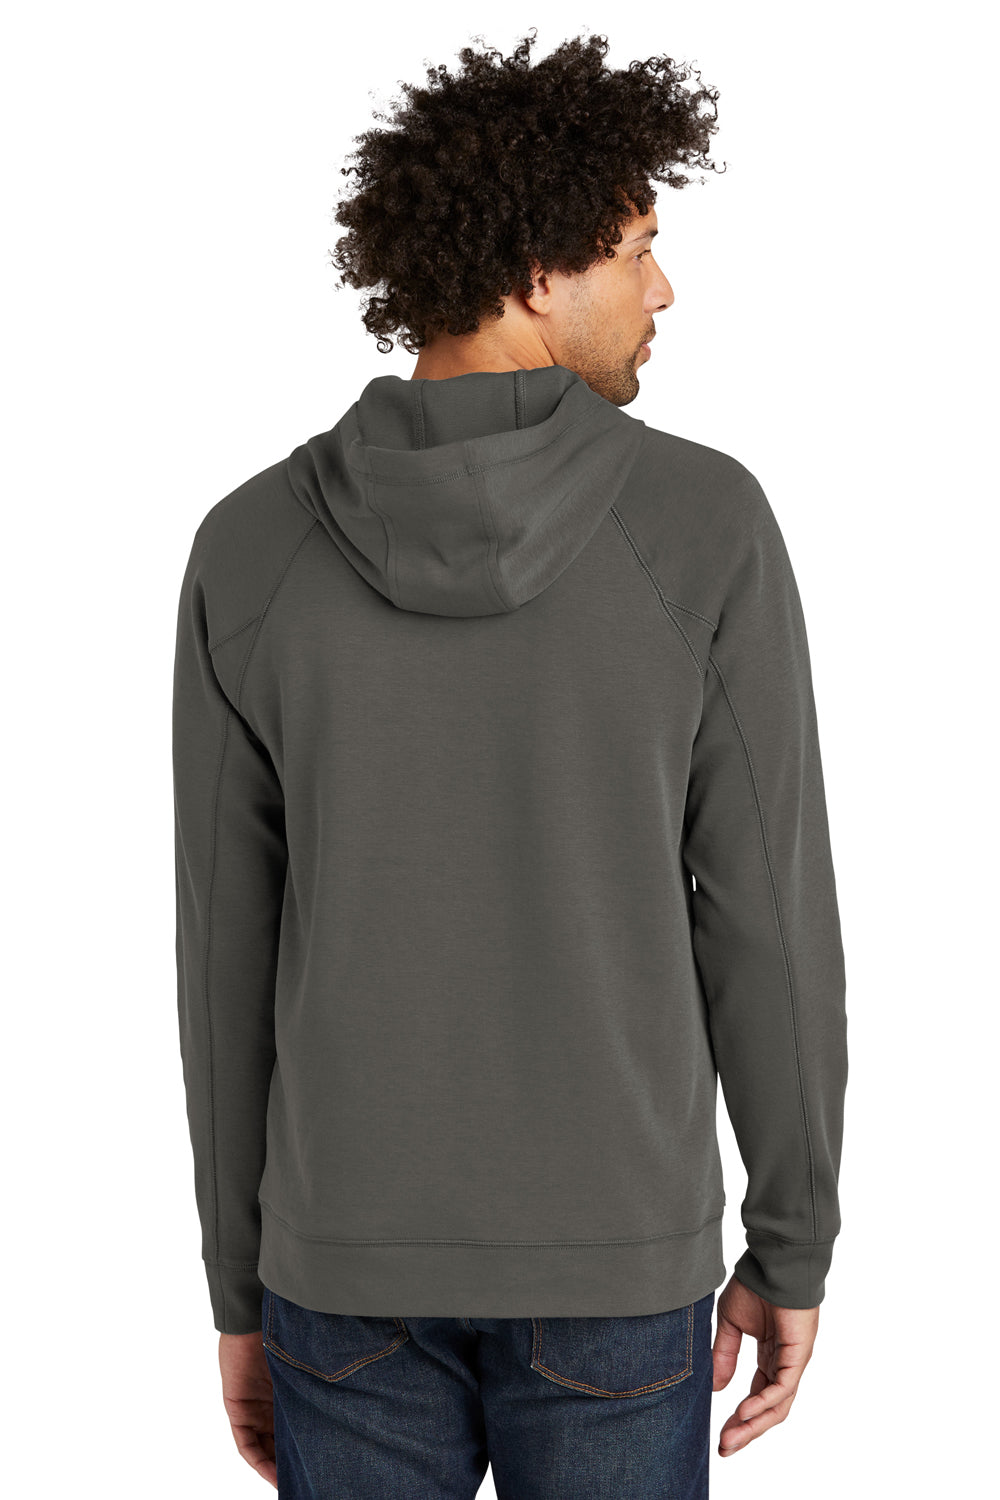 New Era NEA541 Mens STS 1/4 Zip Hooded Sweatshirt Hoodie Graphite Grey Back